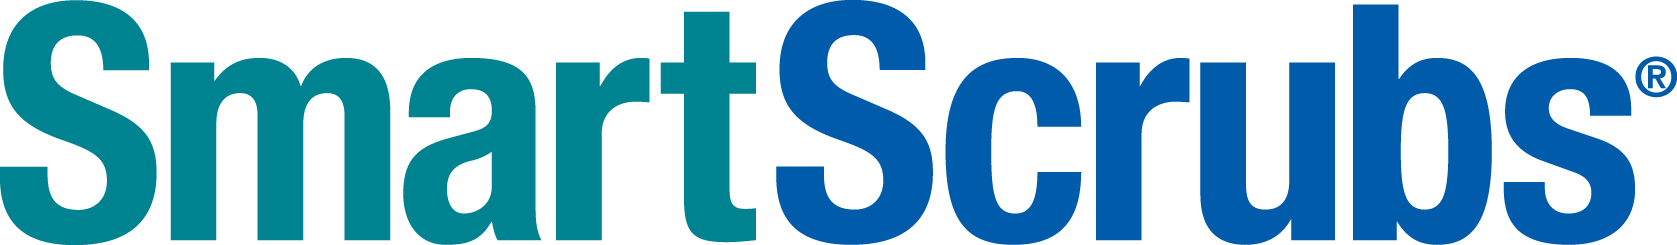 SmartScrubs Logo